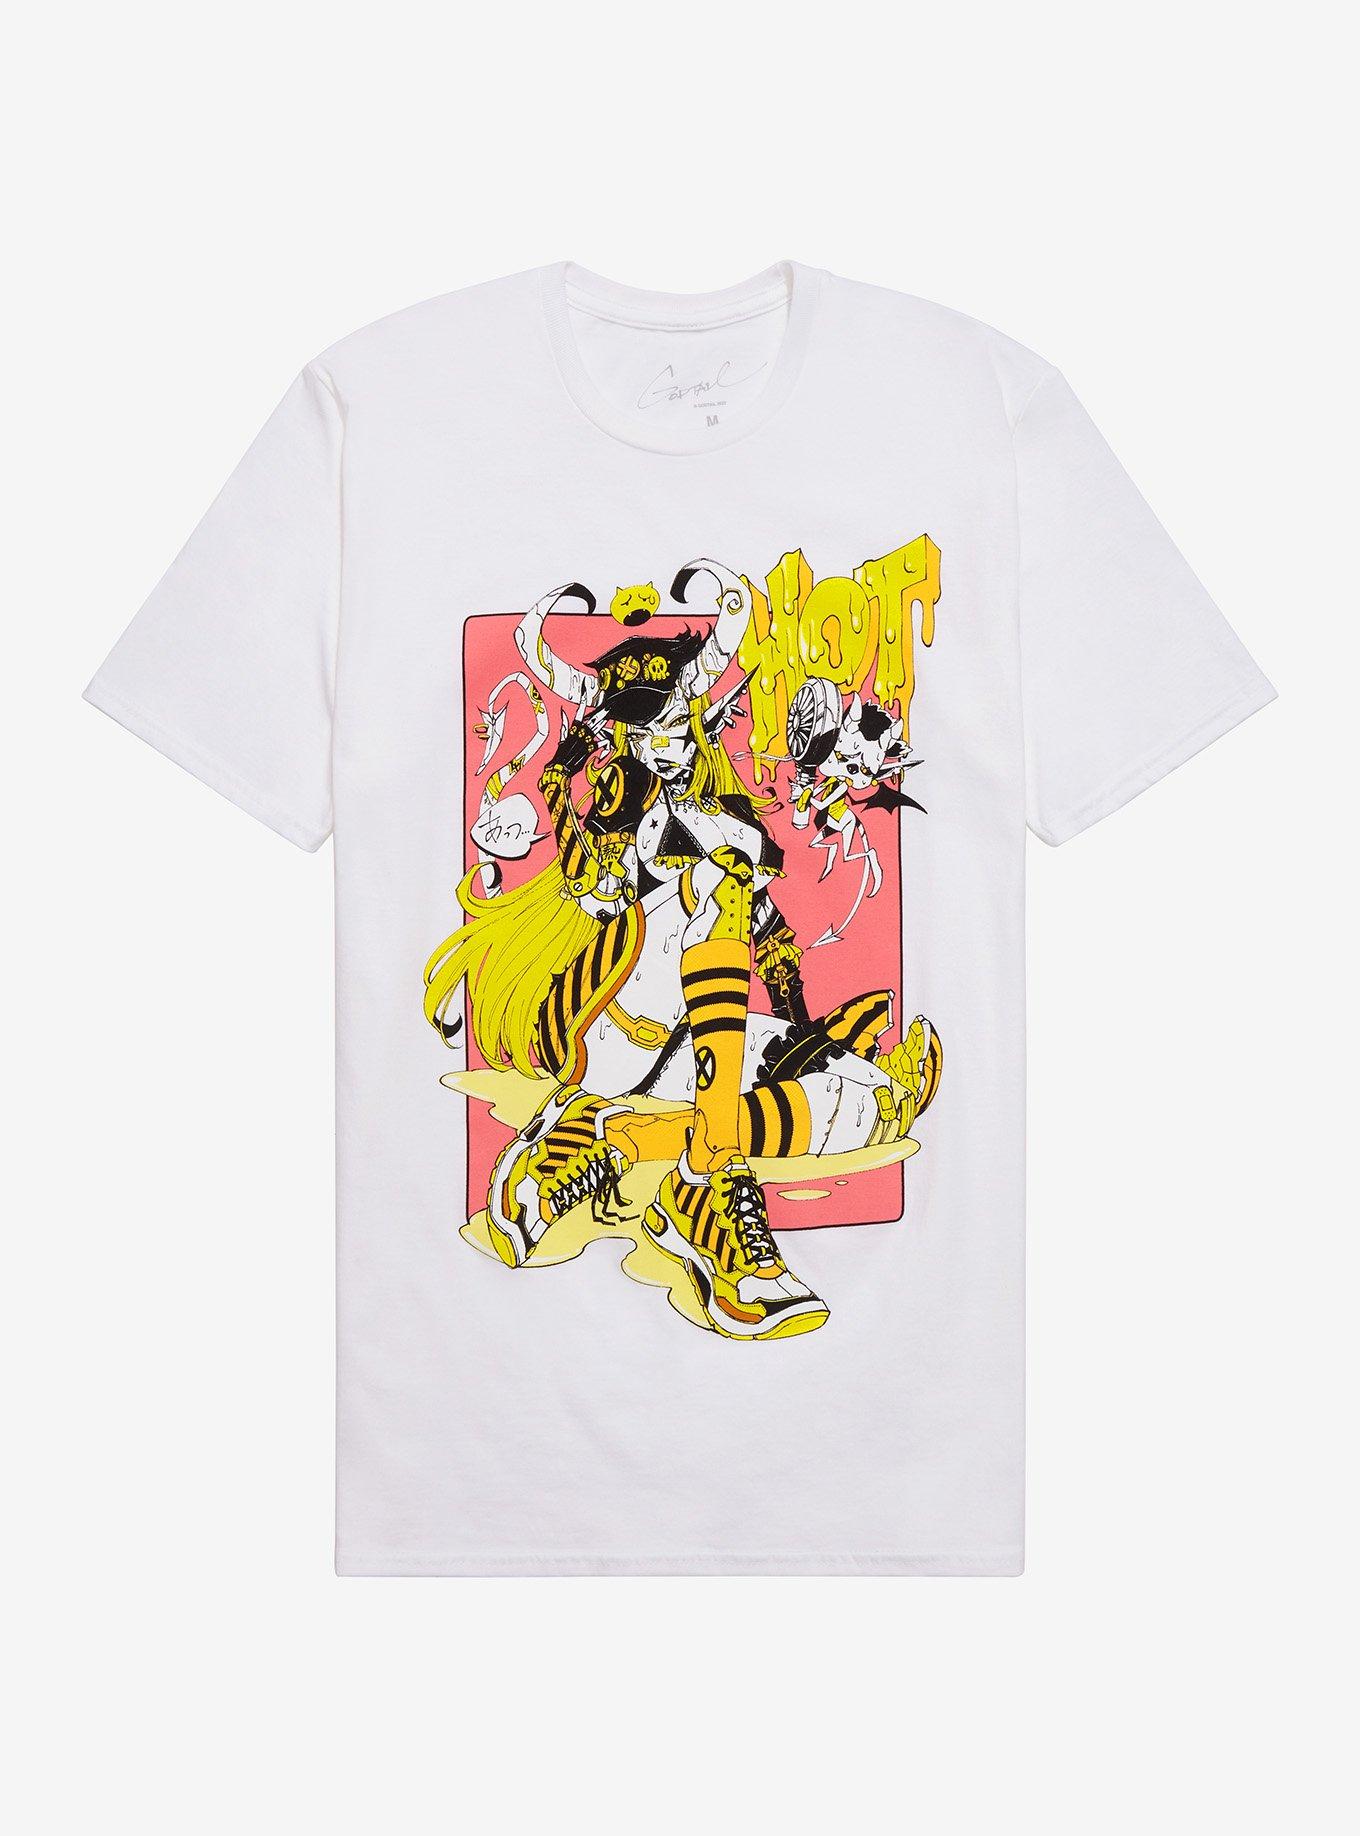 Honey Anime Girl T-Shirt By Godtail777 | Hot Topic